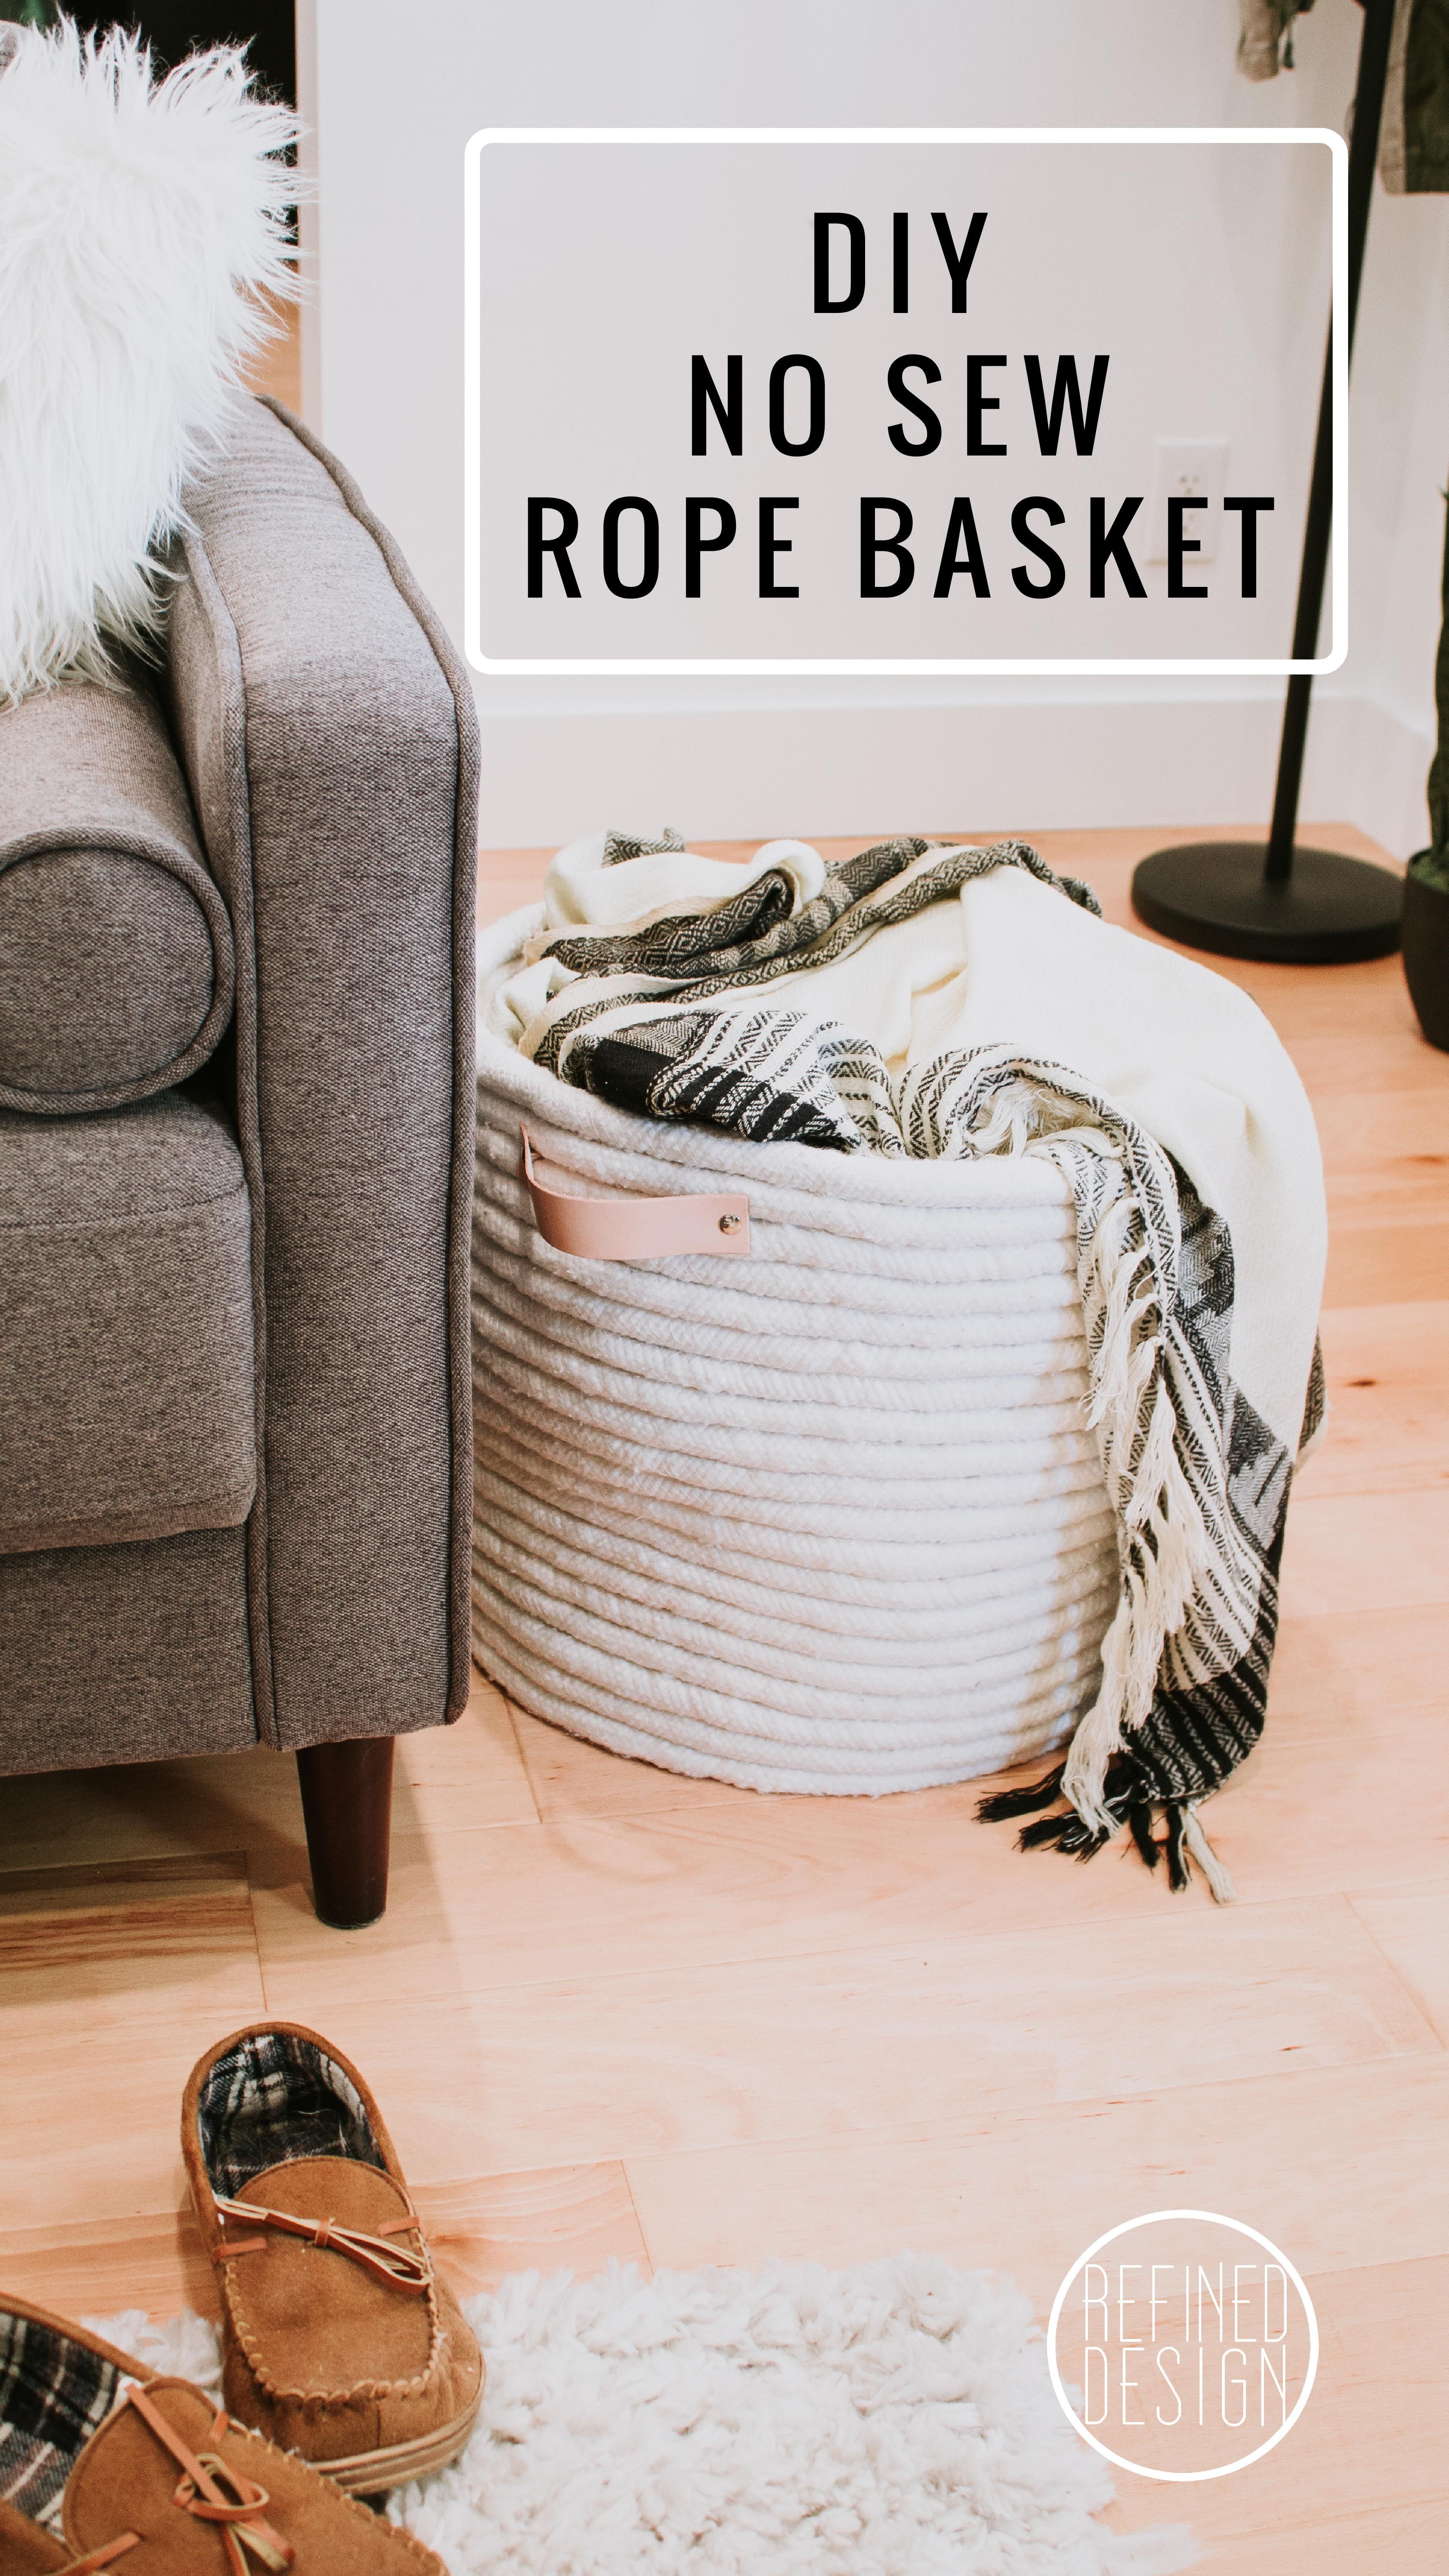 DIY NO SEW ROPE BASKET -   14 fabric crafts DIY rope basket ideas